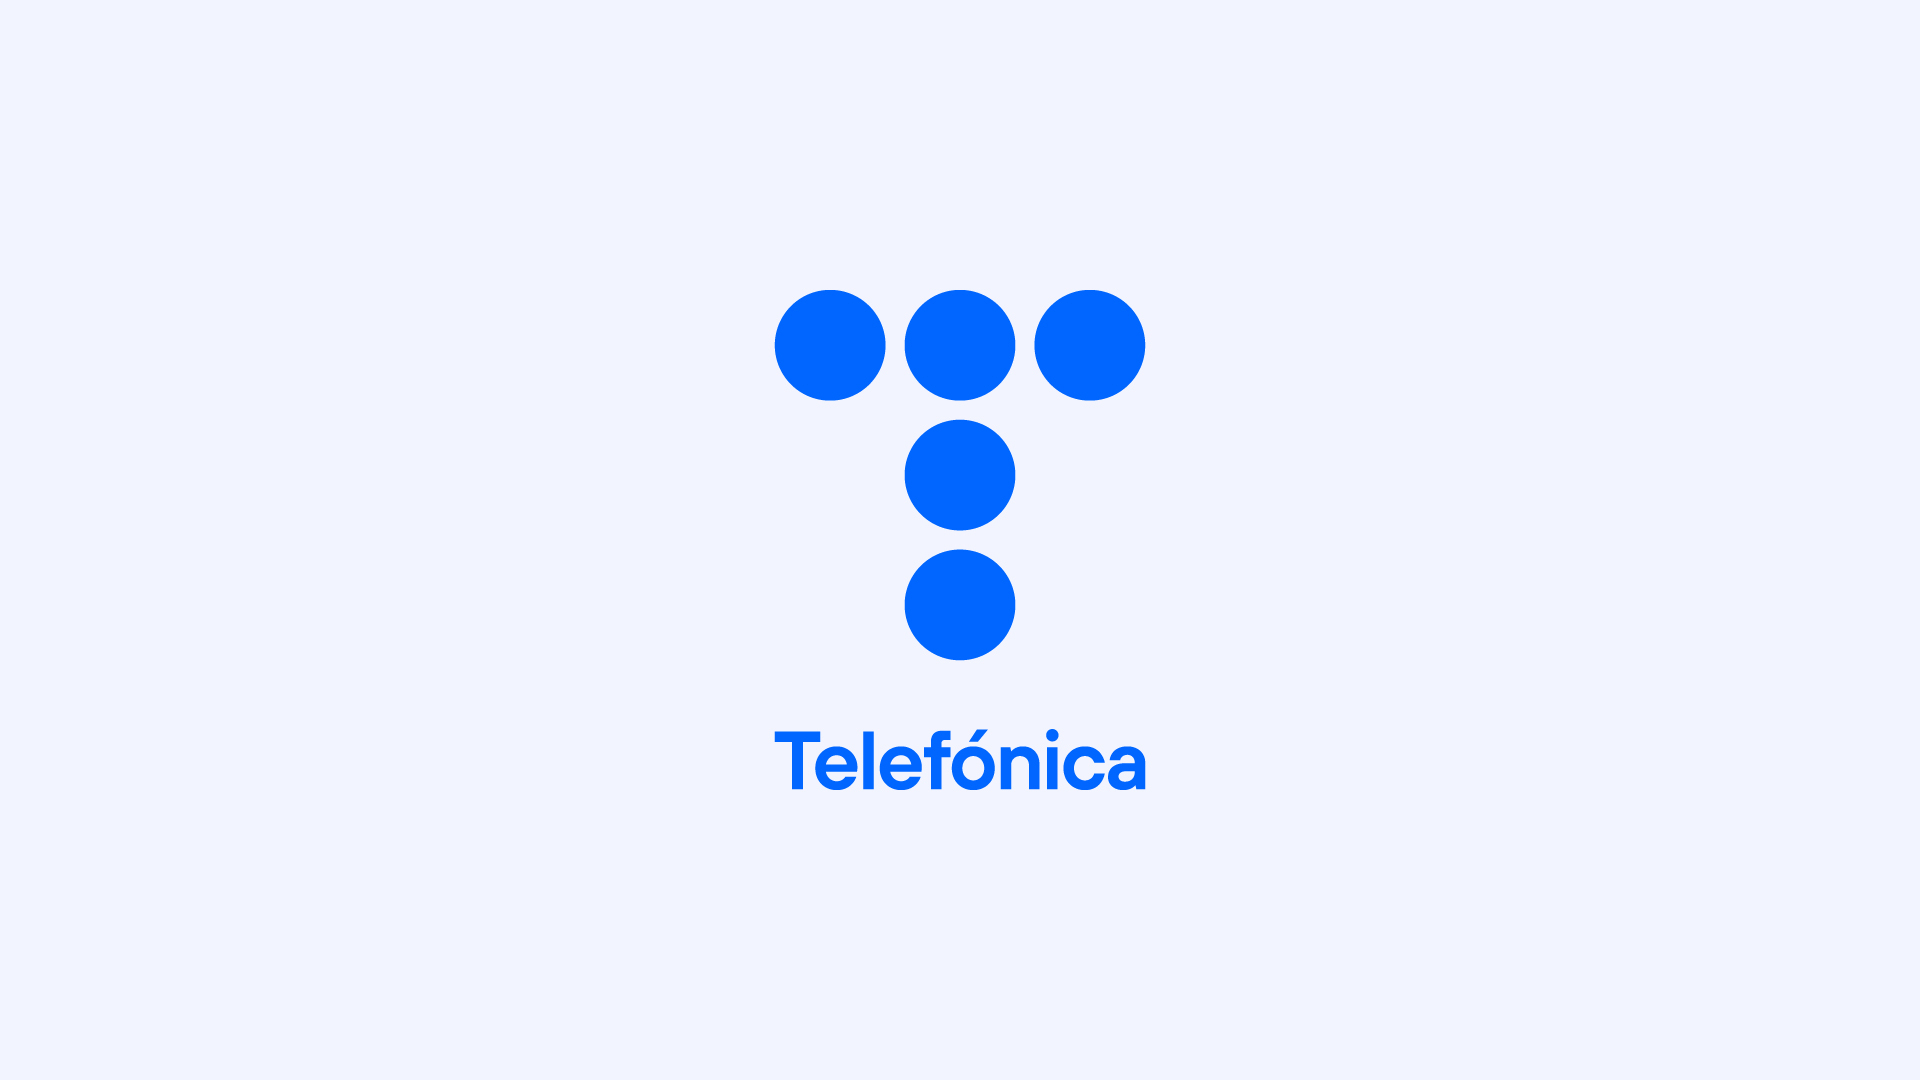 Telefonica logo vertical positivo